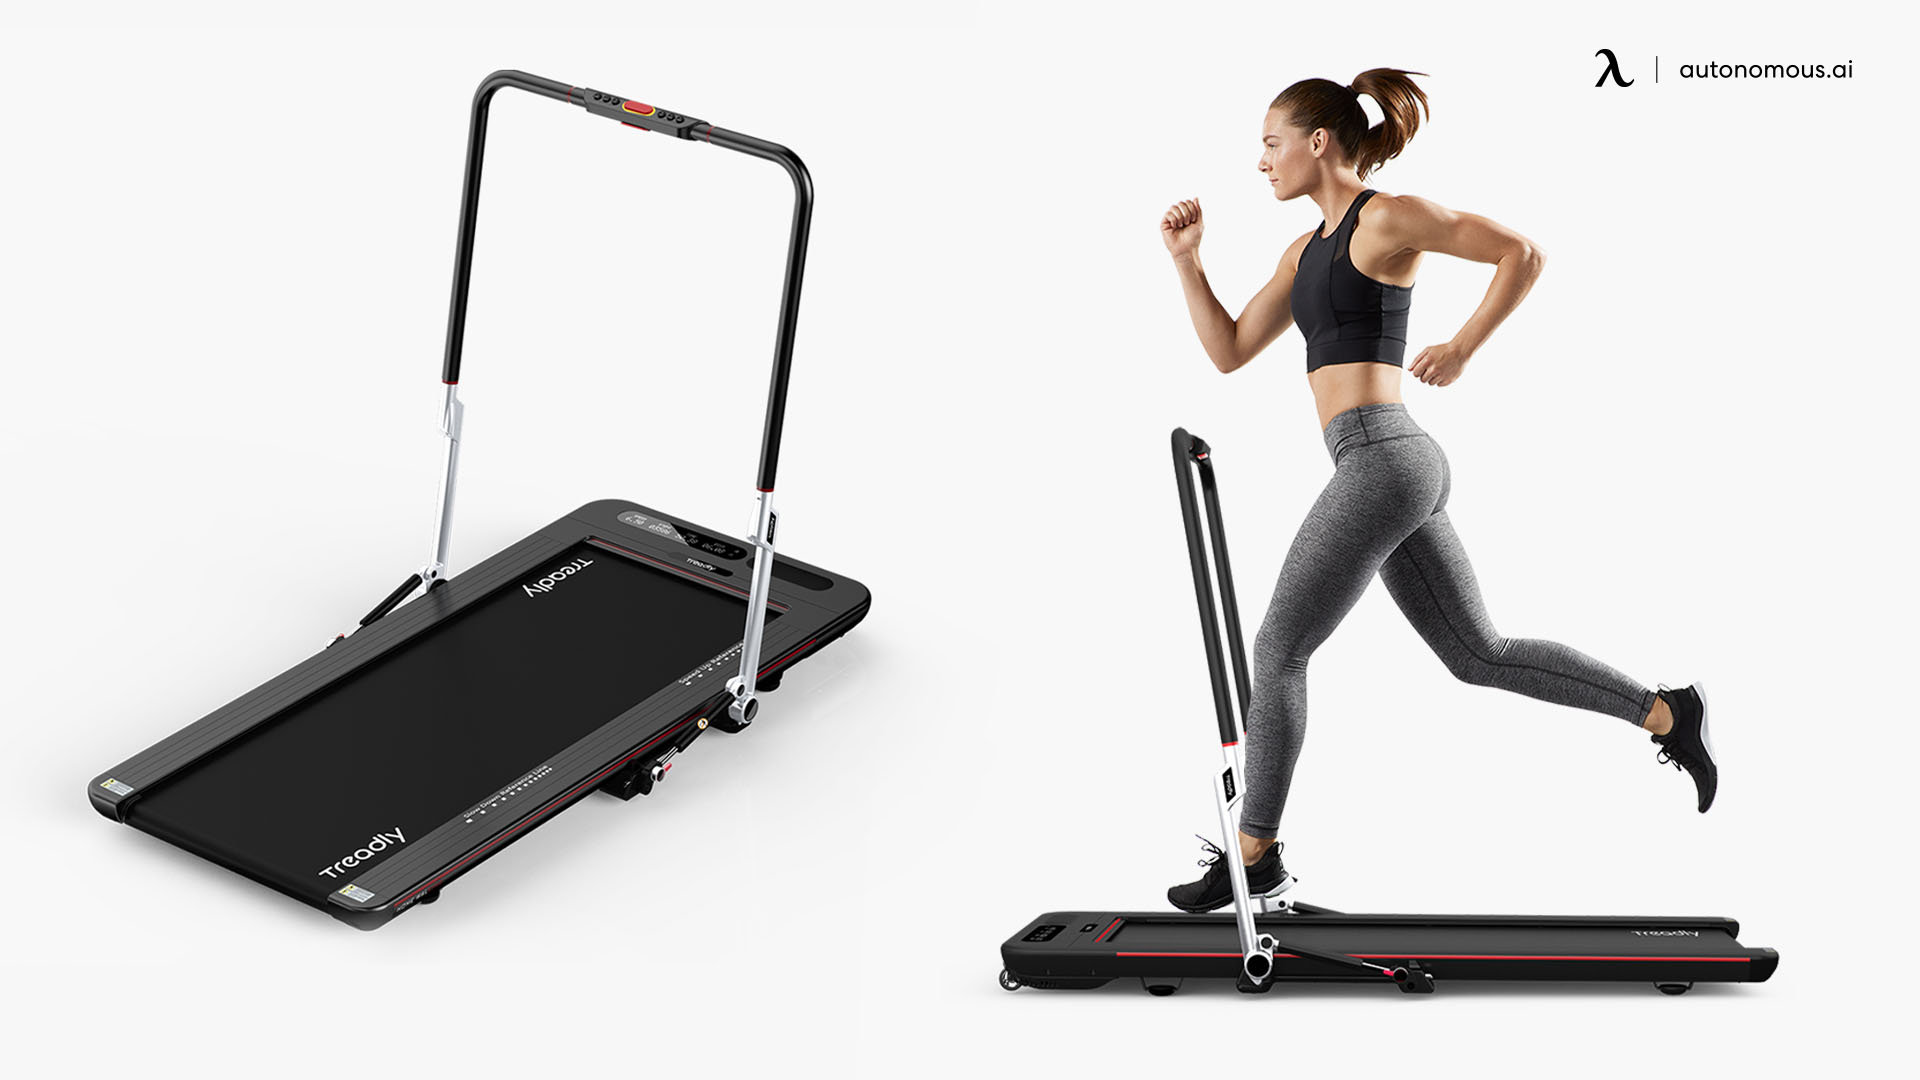 Treadmill garden gym equipment